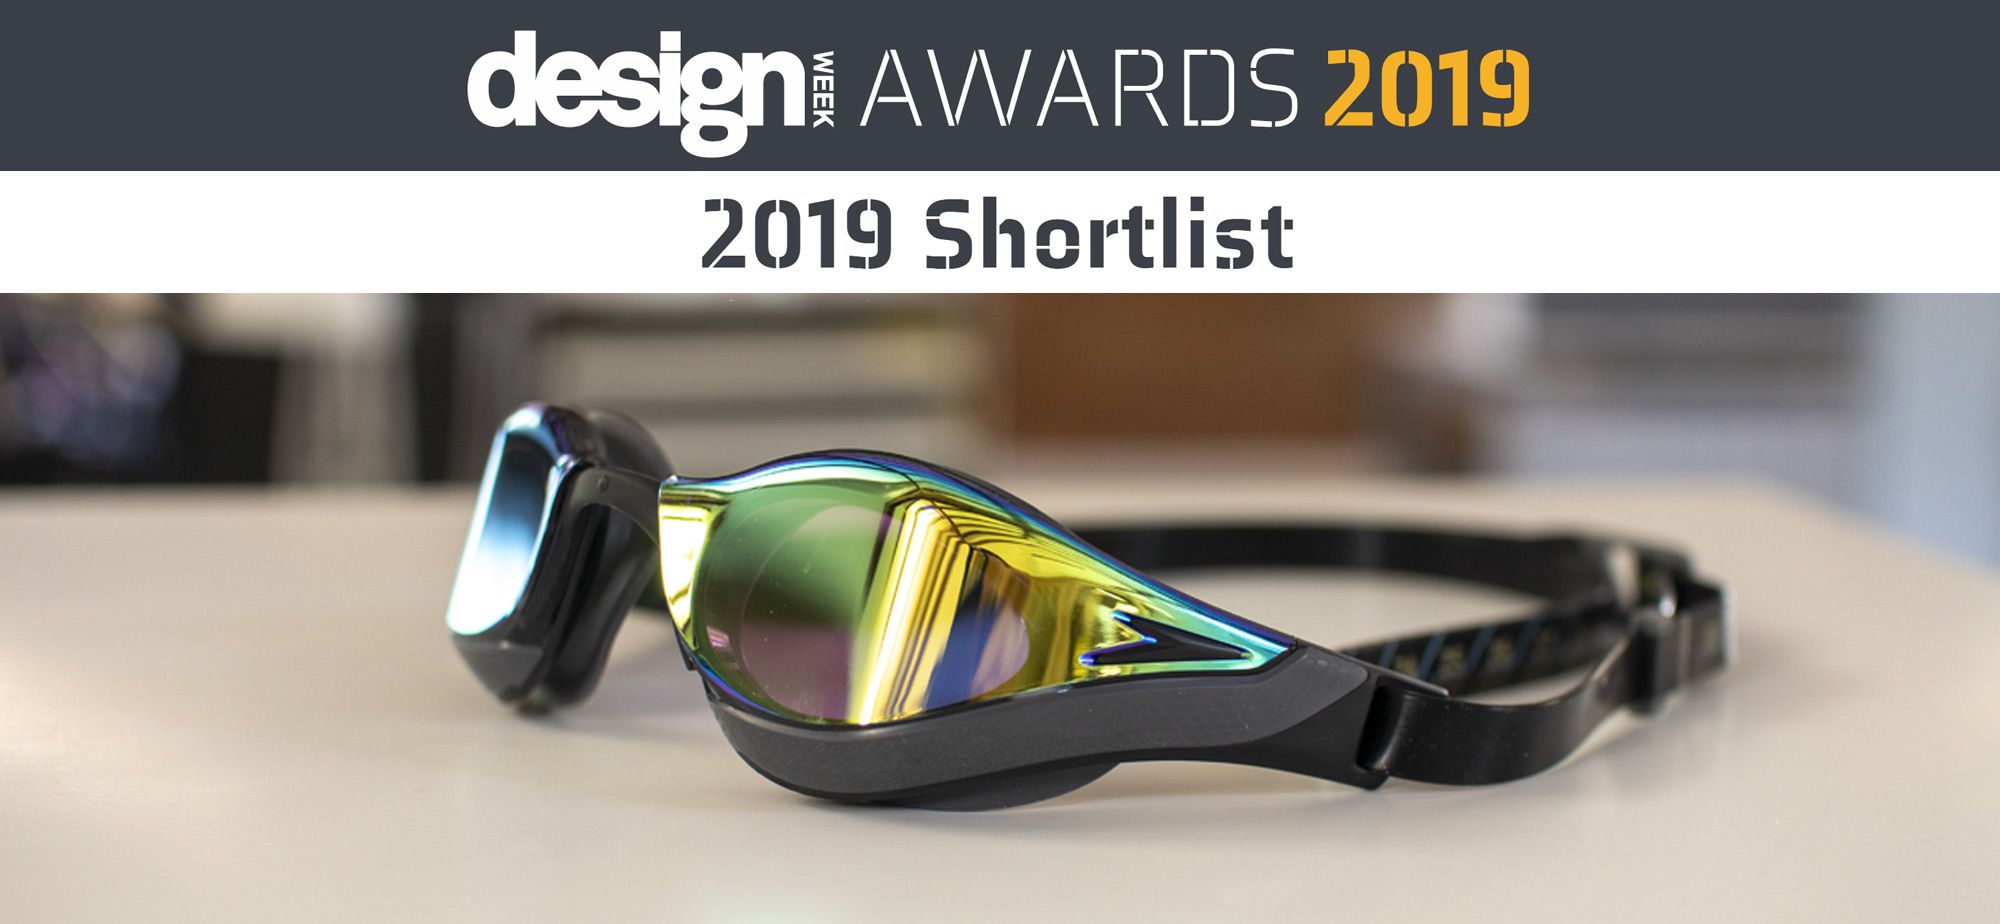 Design Week Awards 2019 Shortlist